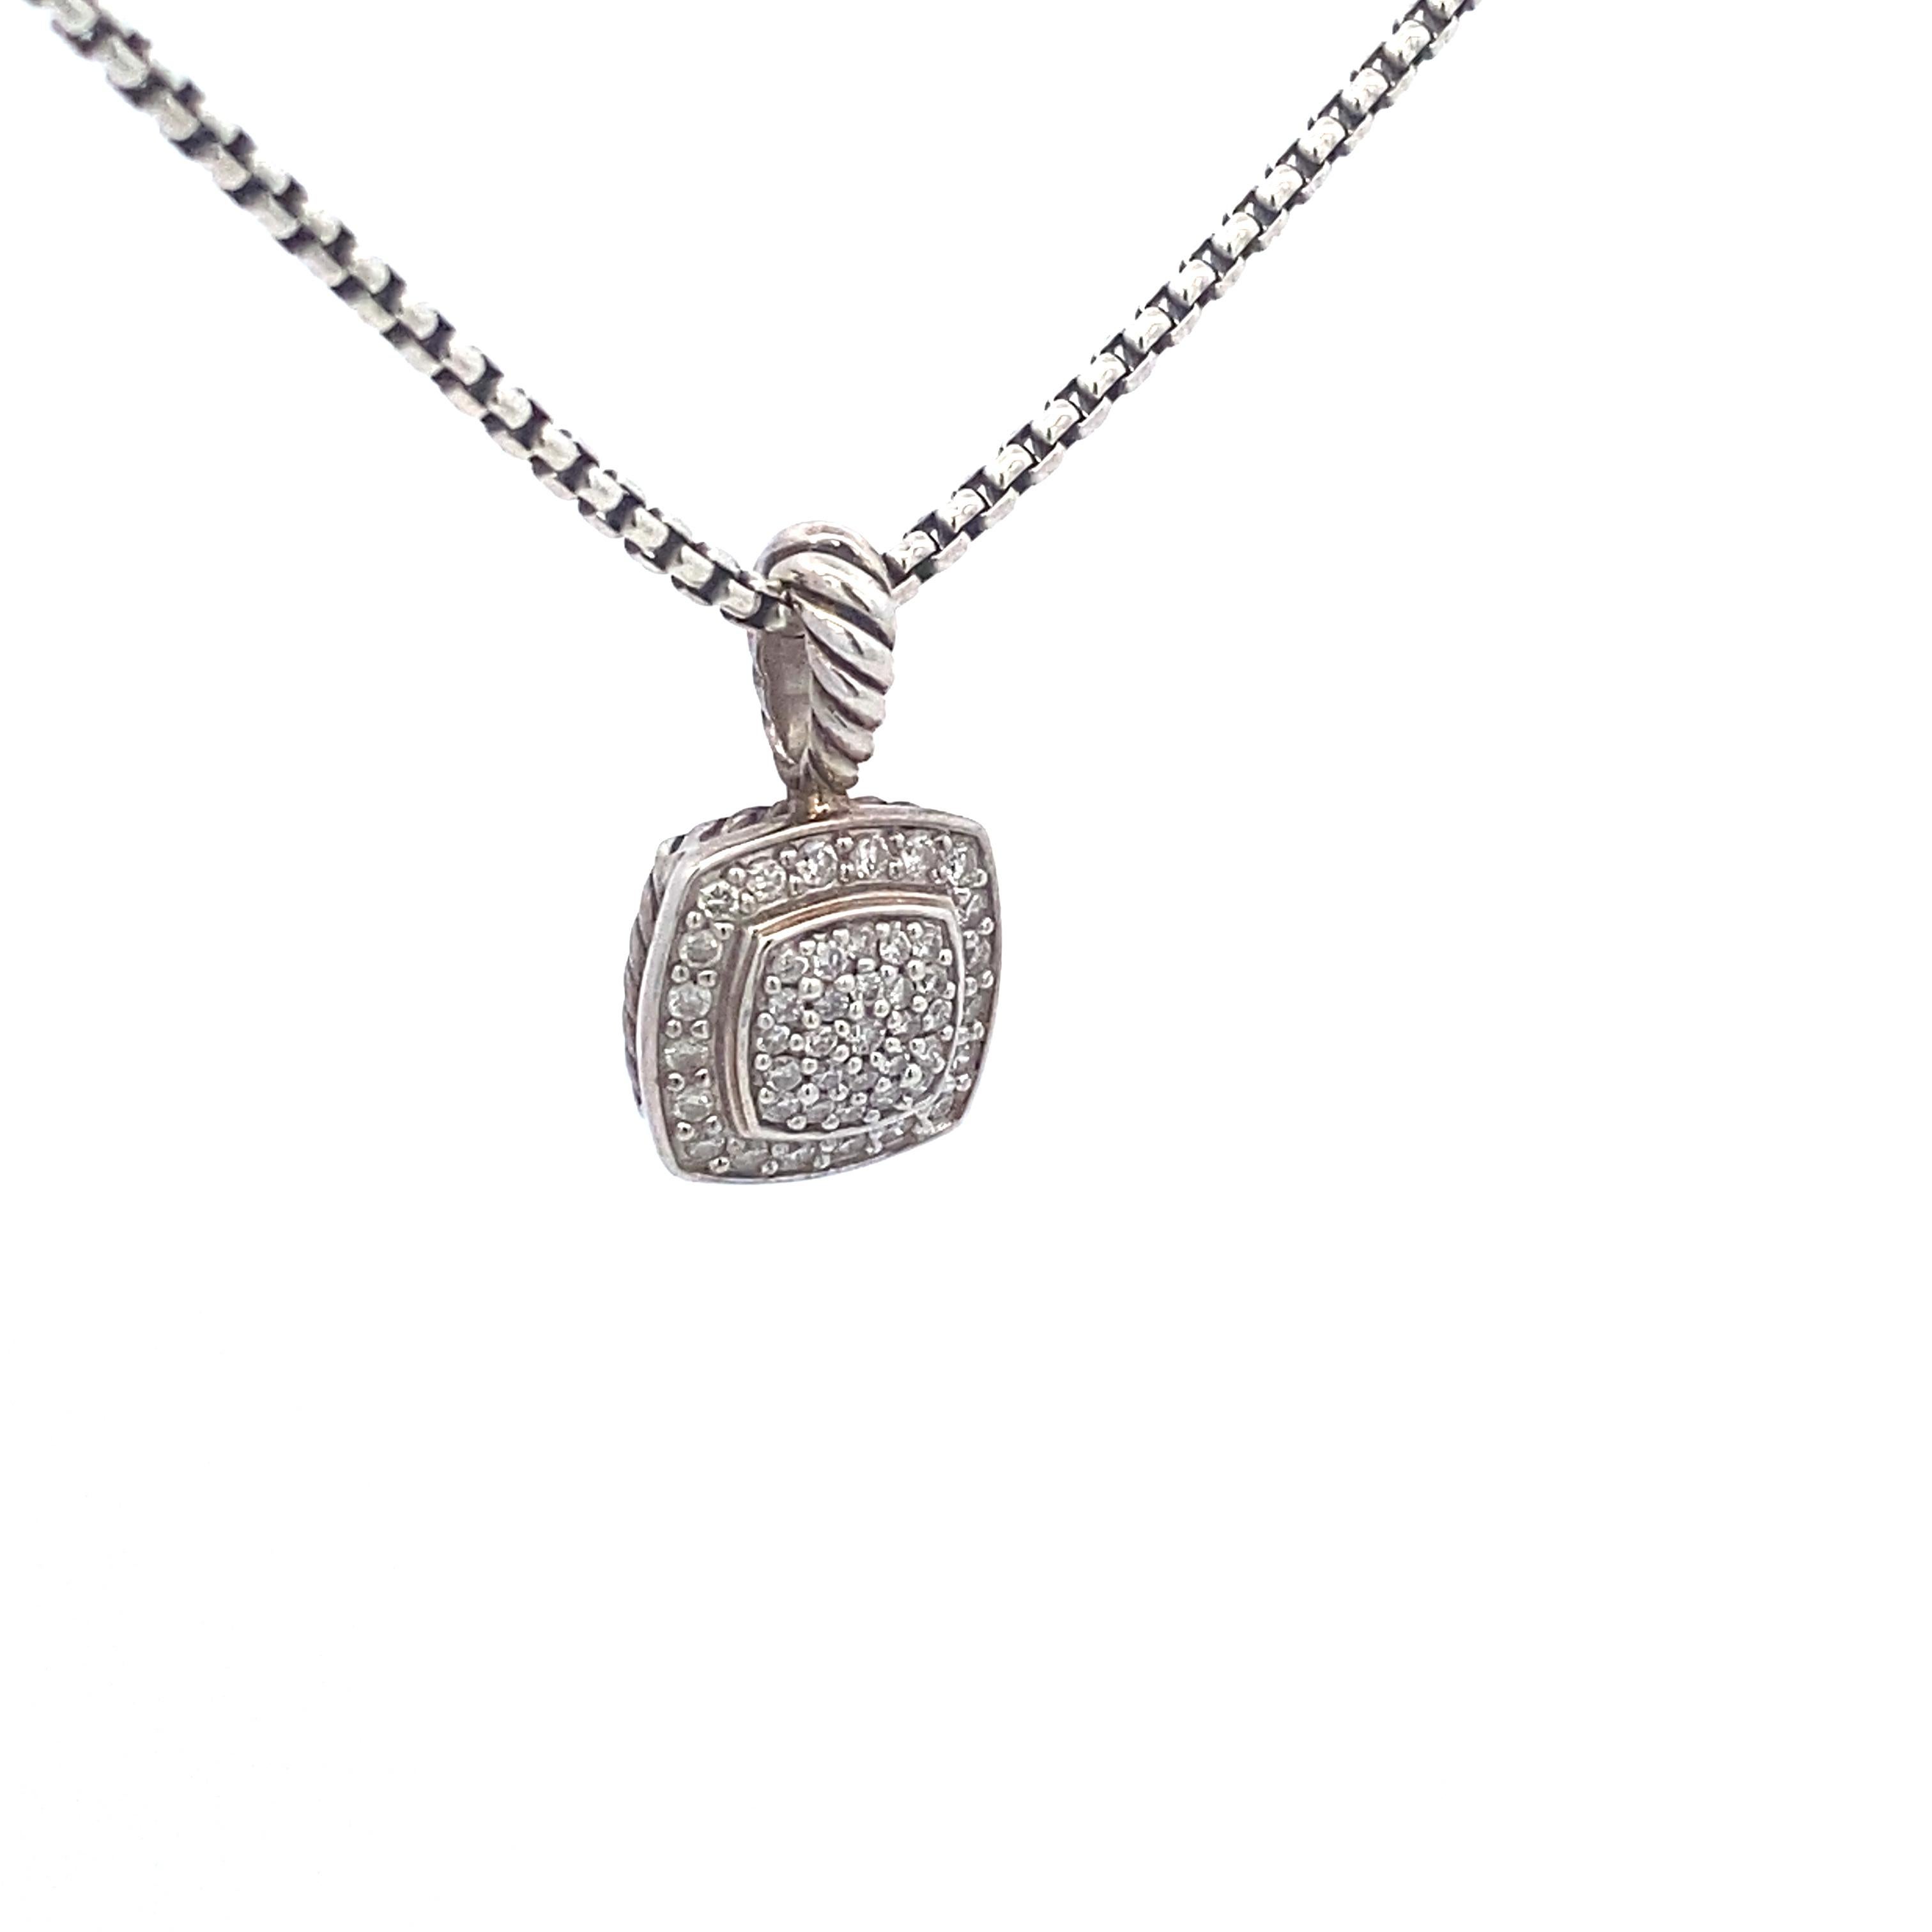 Contemporary David Yurman Petite Albion Pendant Necklace in Sterling Silver with Pavé Diamon For Sale